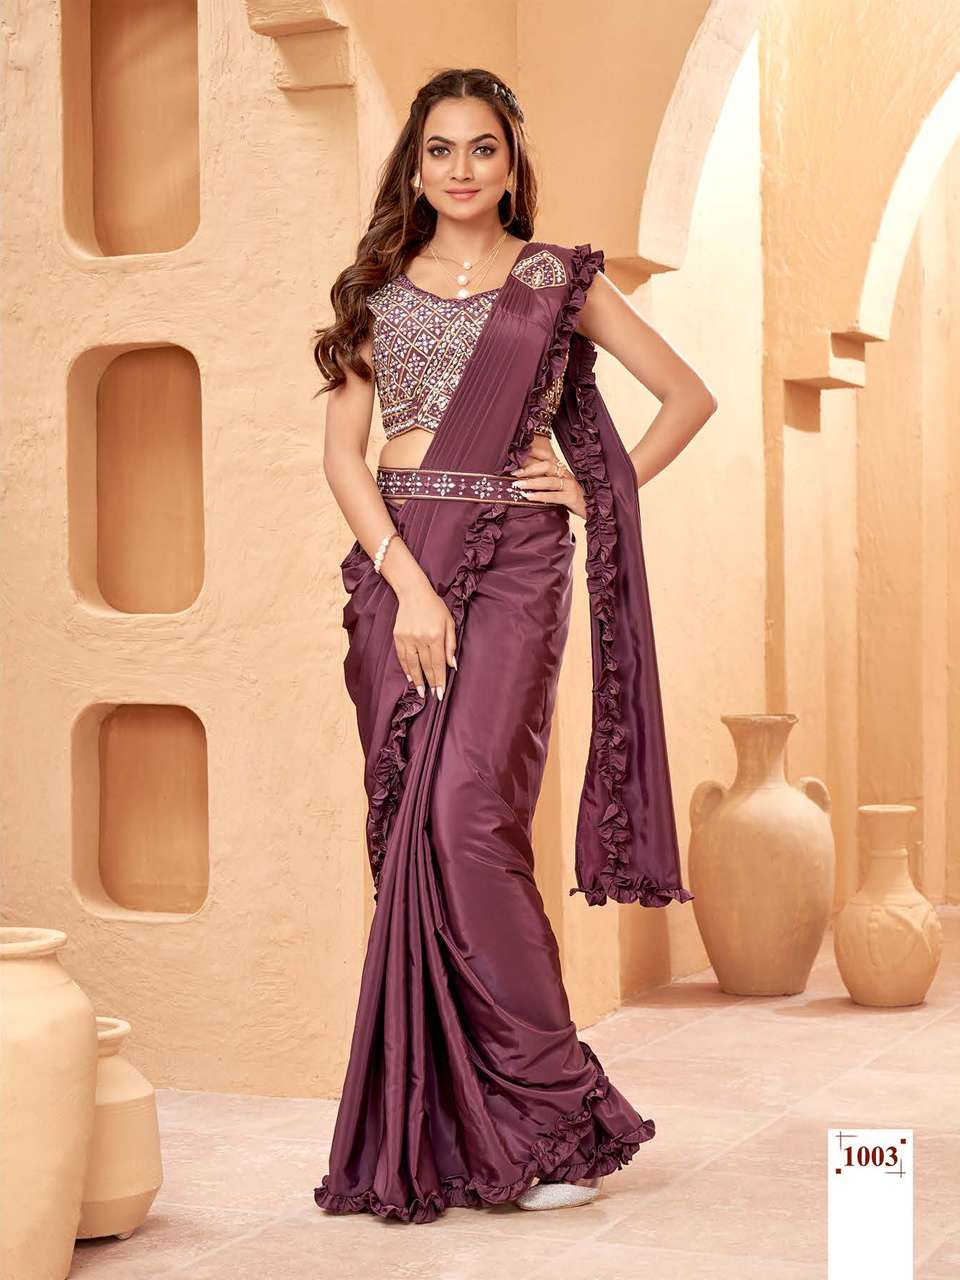 Fancy Saree - Buy Latest Fancy Sarees Online Shopping | SuratiFabric